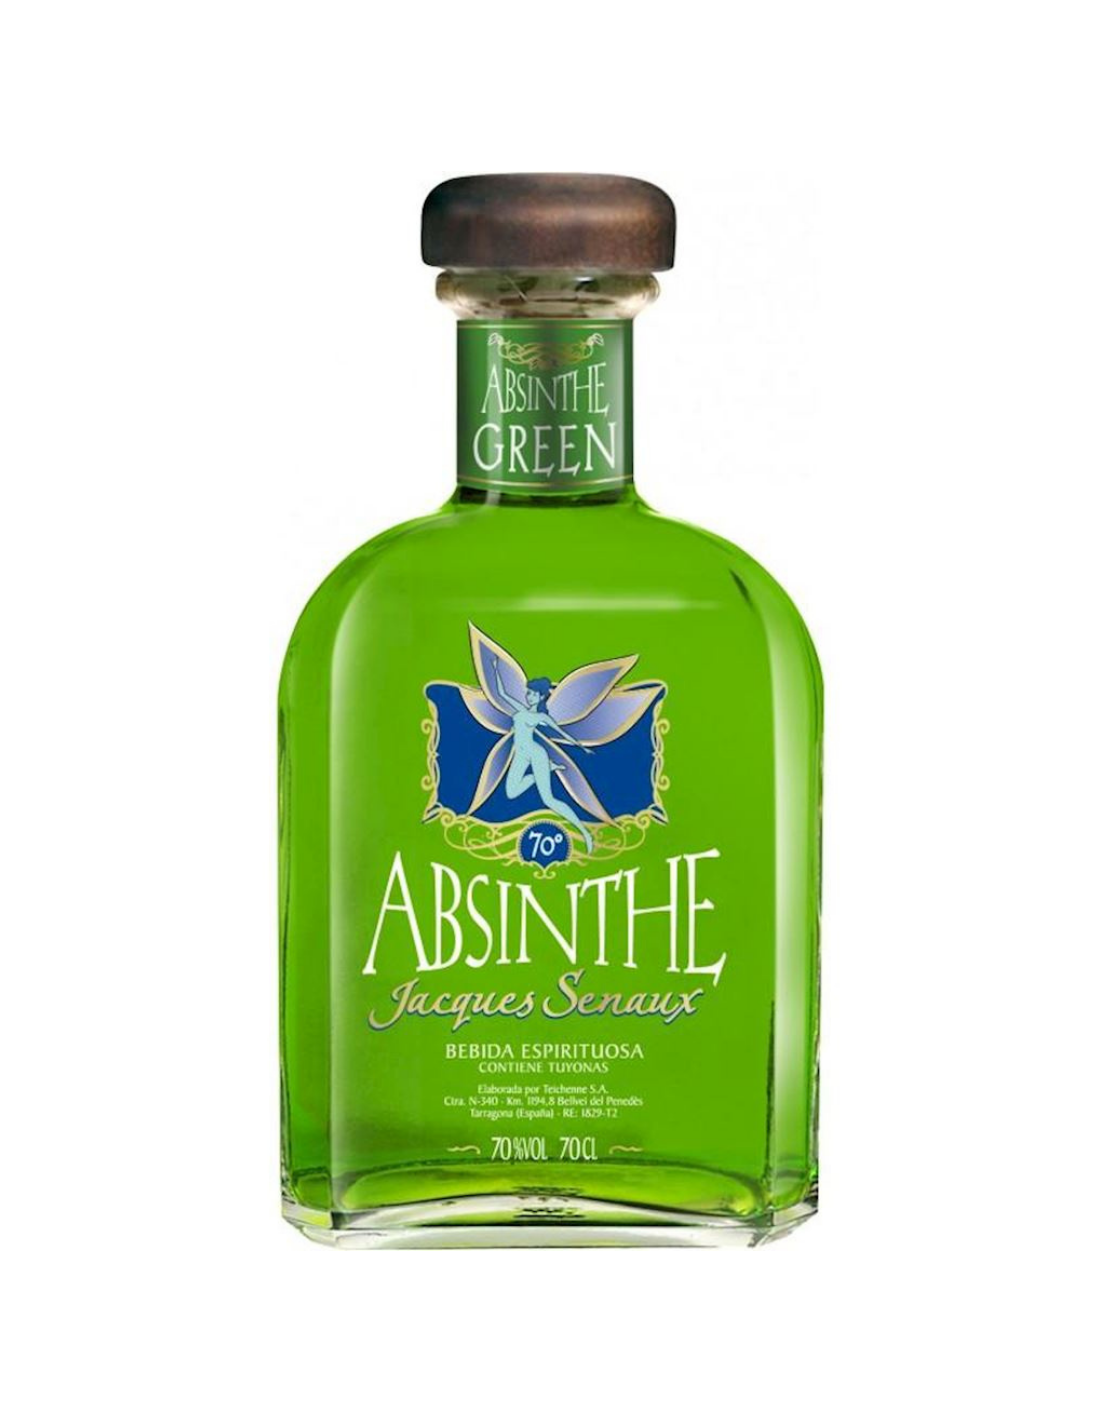 Absint Jacques Senaux Green, 70% alc., 0.7L, Spania alcooldiscount.ro